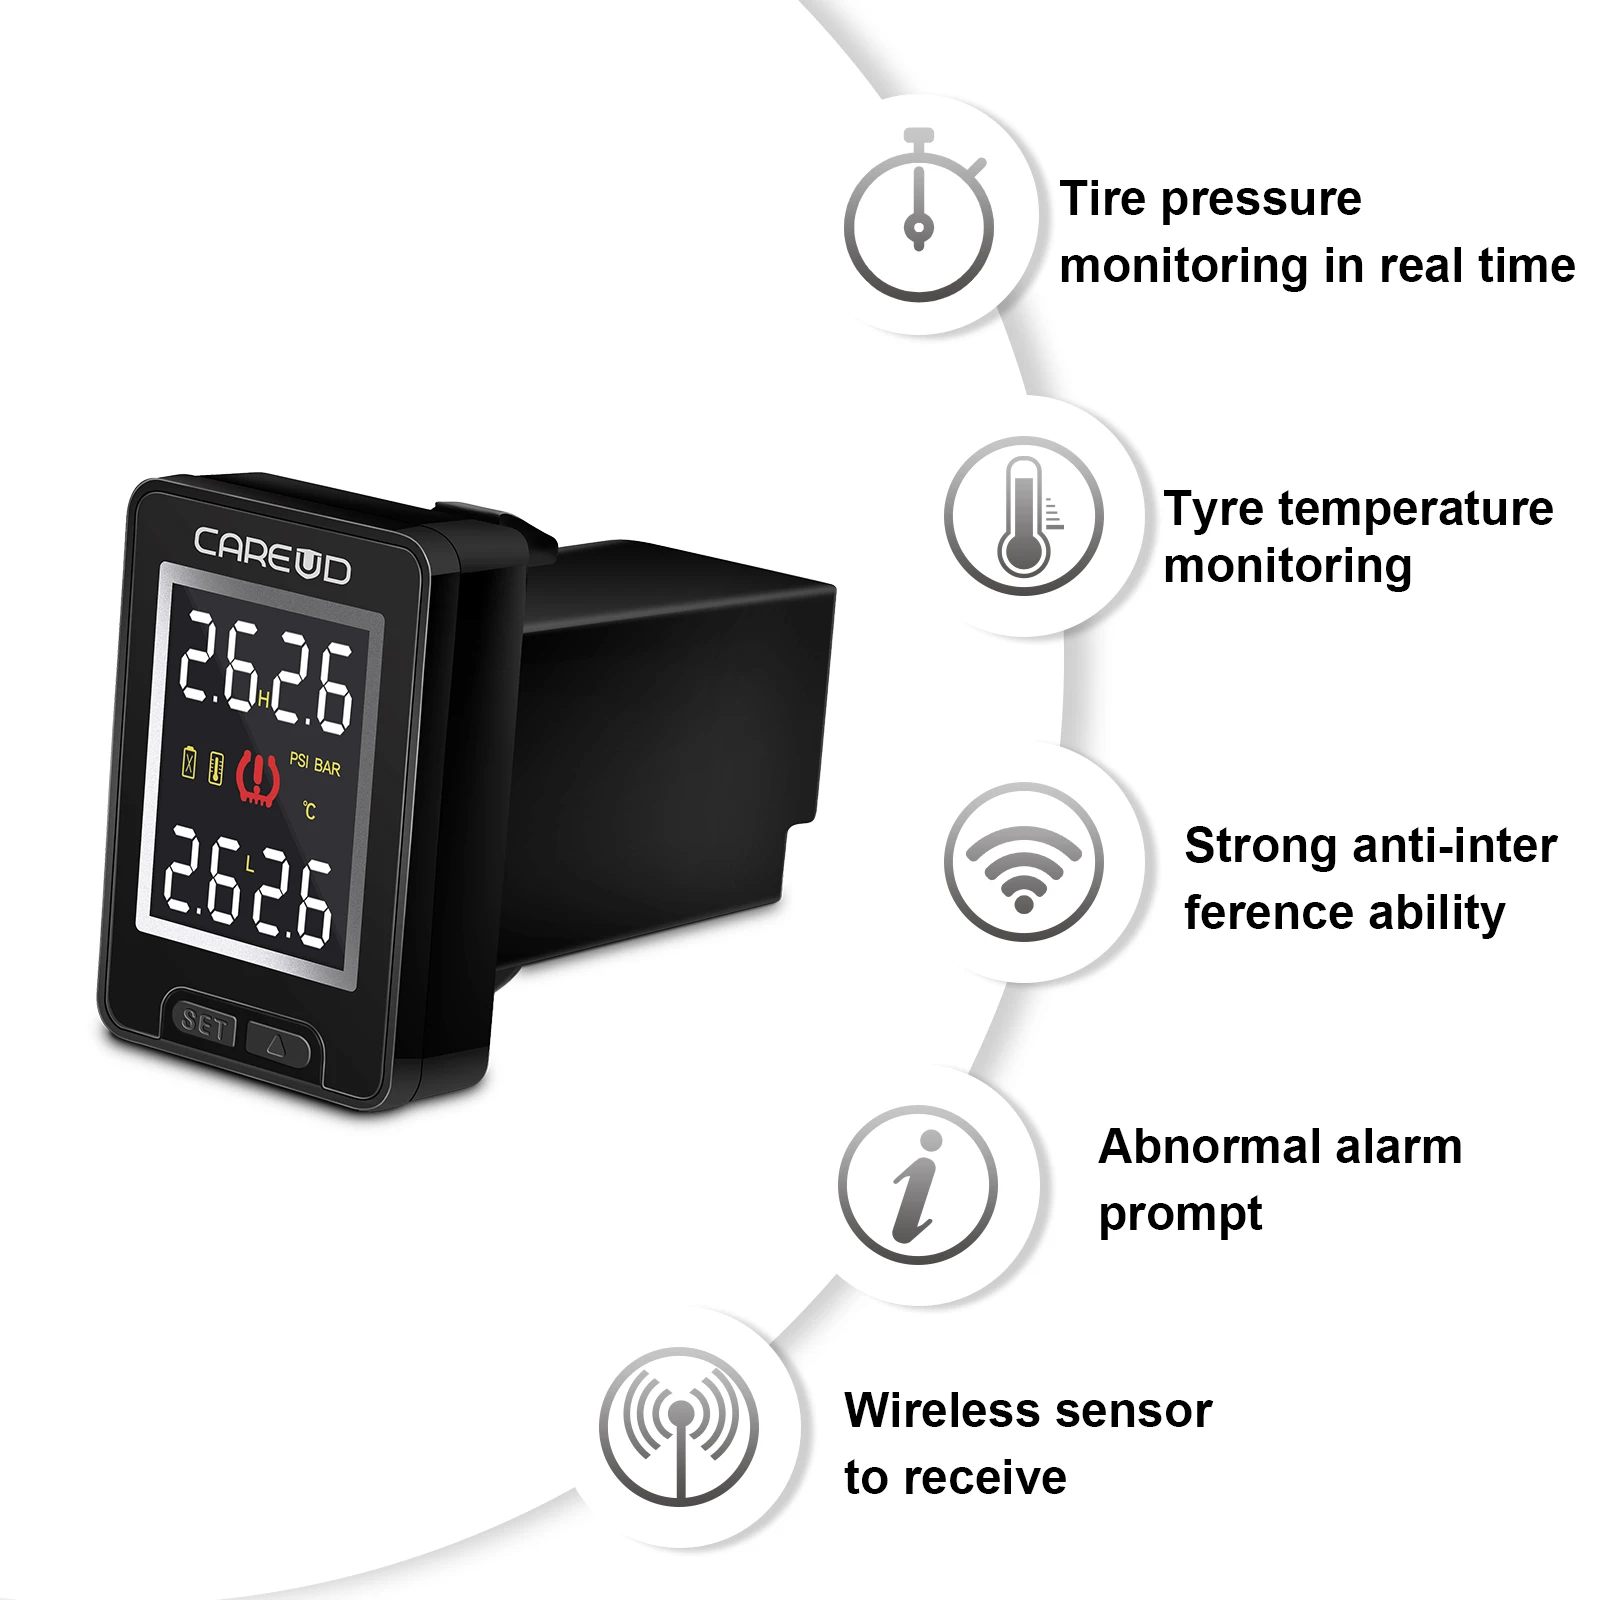 Careud TPMS Receiver Wireless Tire Pressure Monitoring System Wheel Sensors for Toyota Mazda Nissan Honda